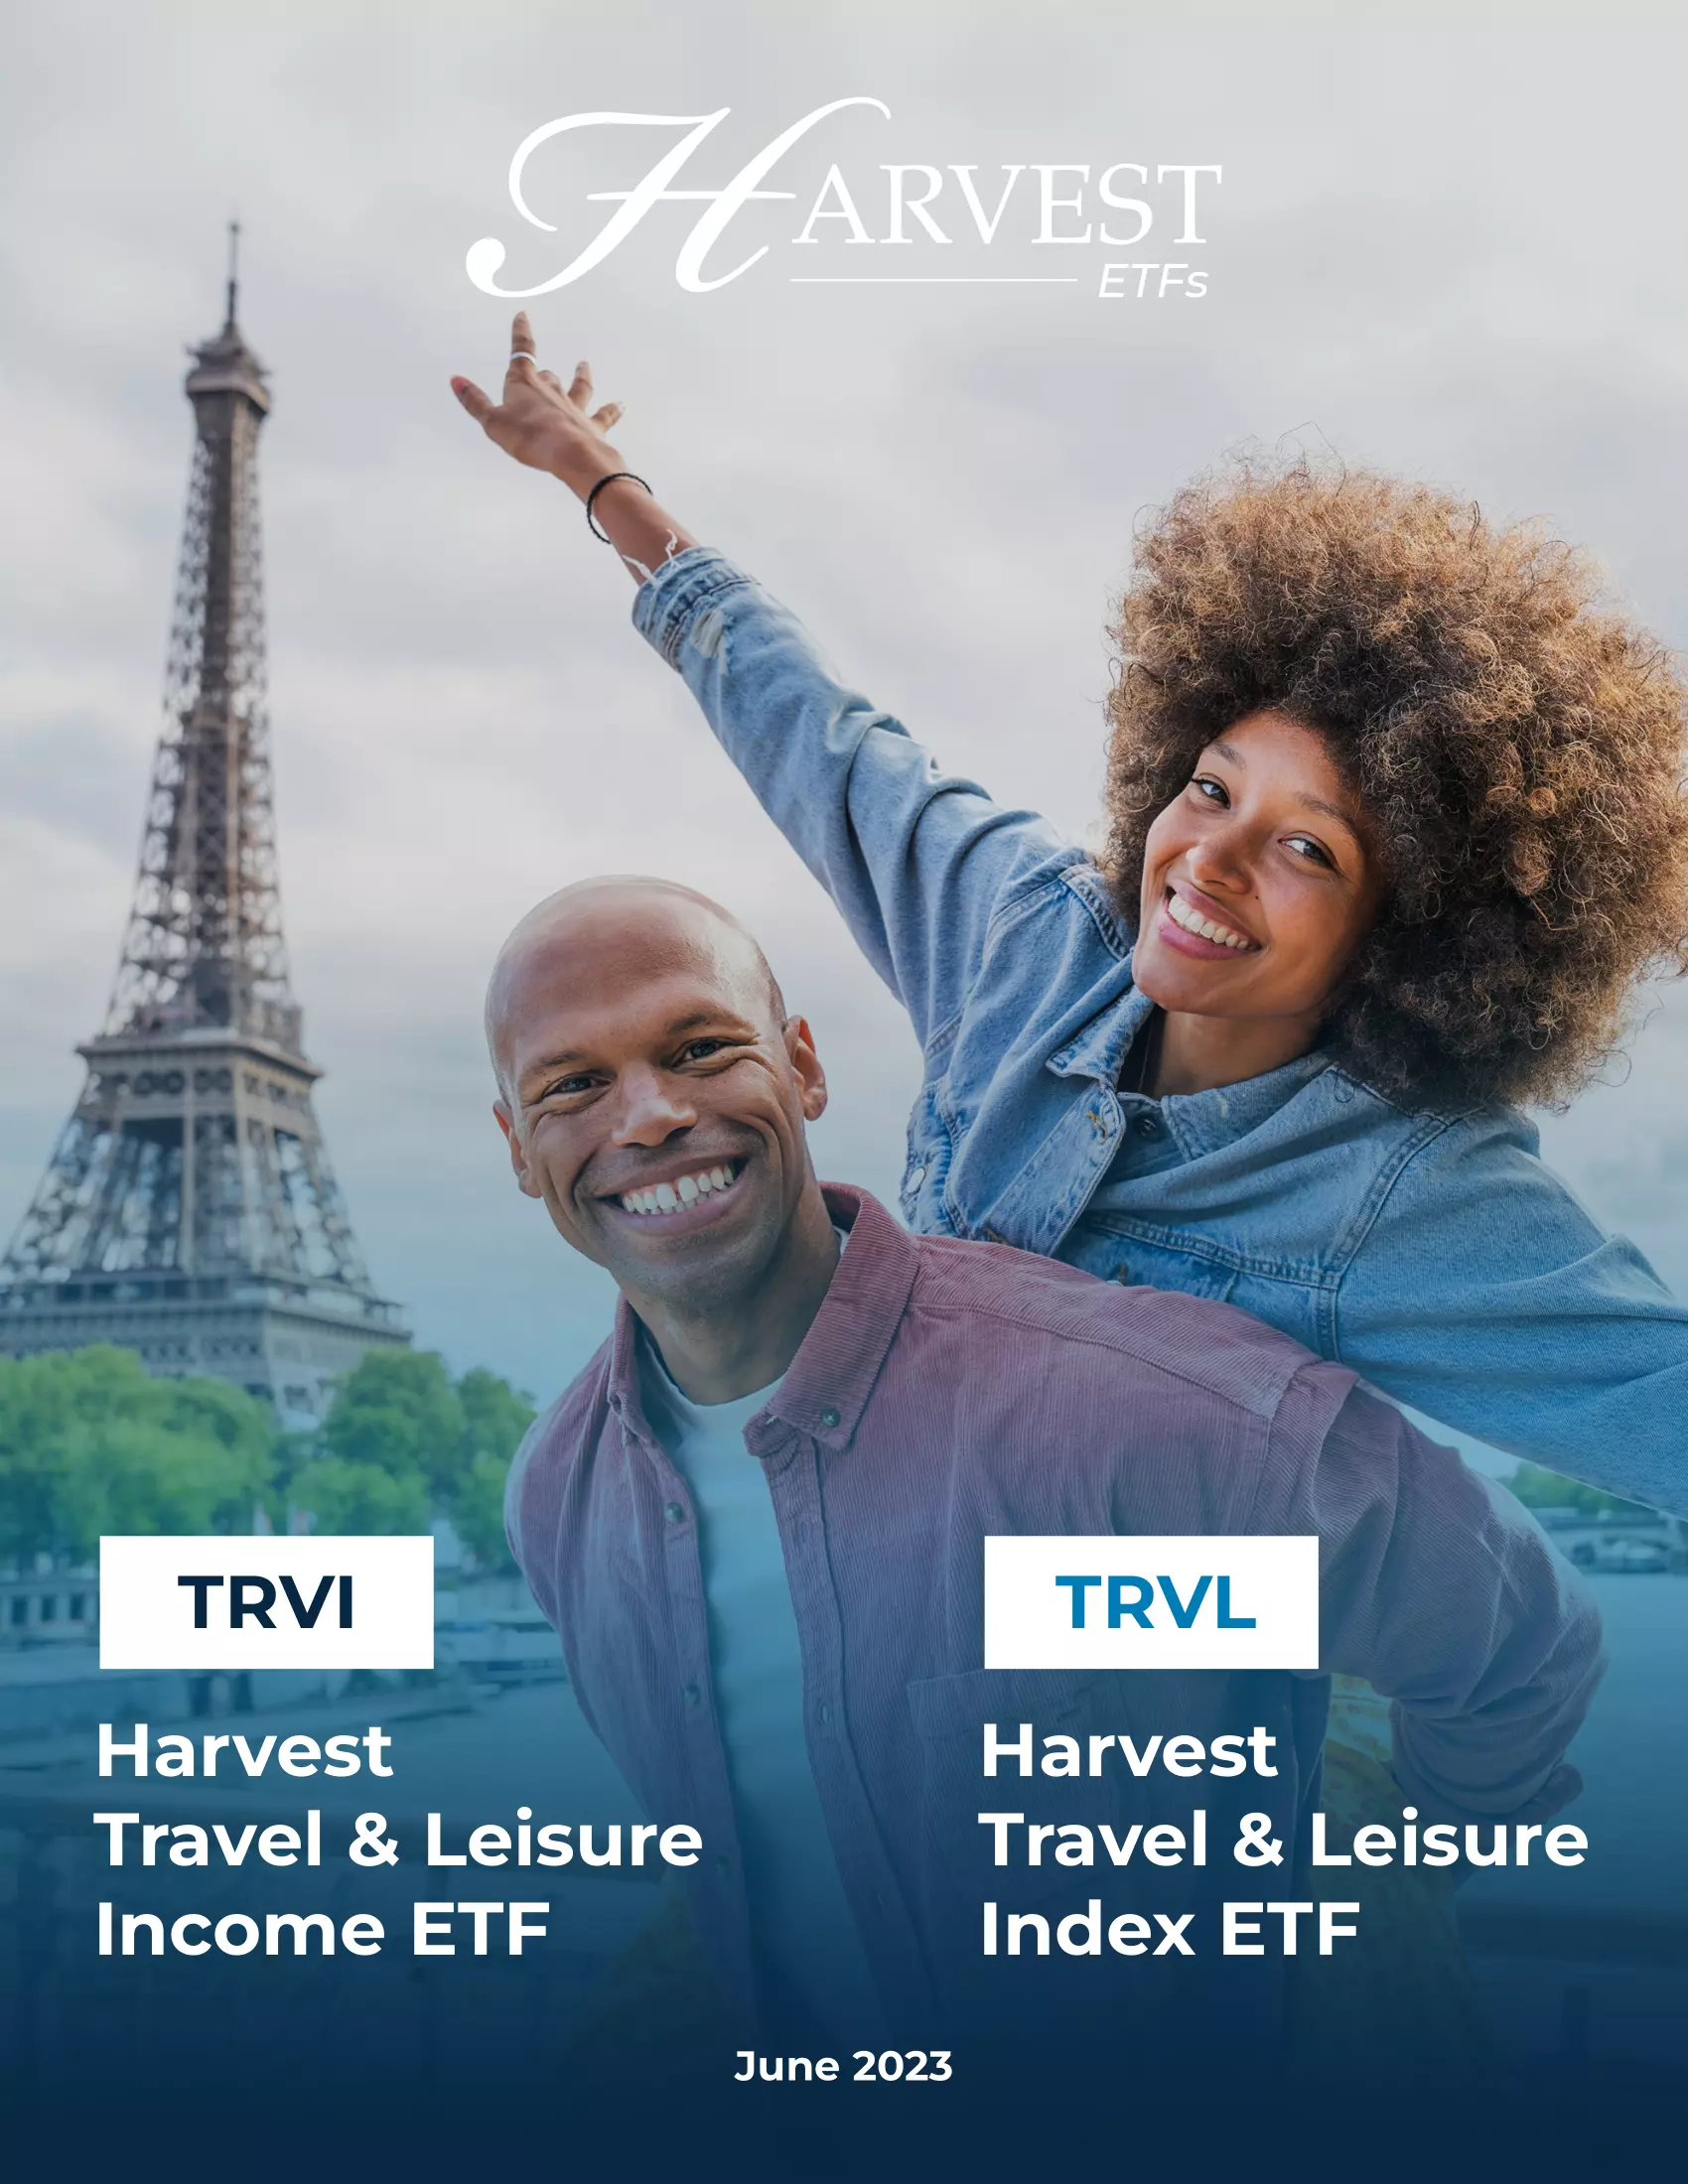 TRVI: Harvest Travel & Leisure Income ETF